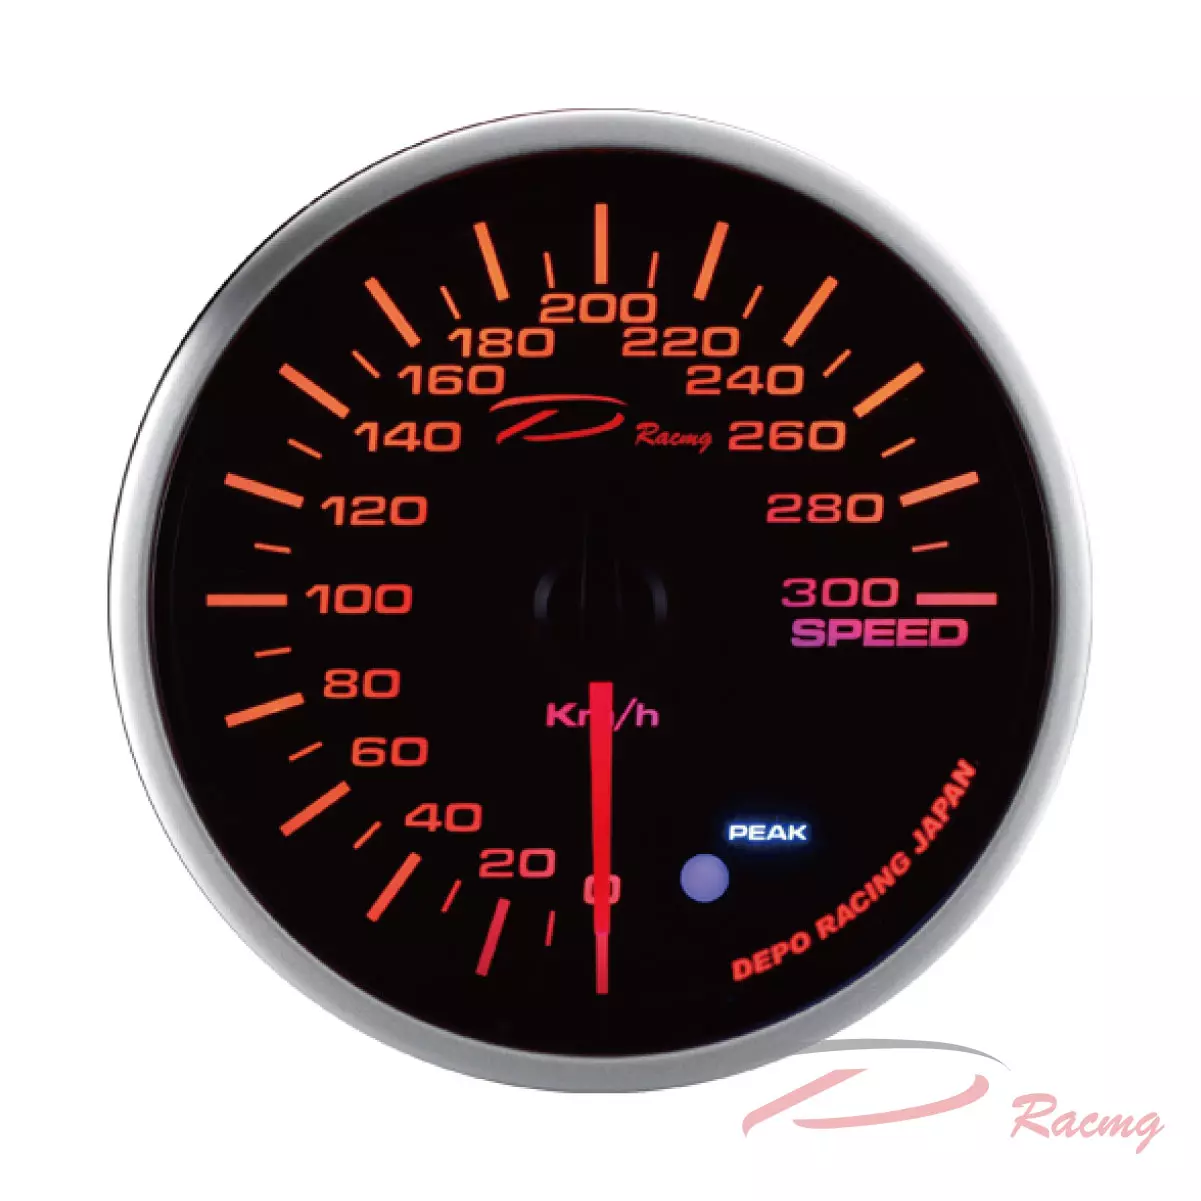 Dracing, Depo racing, AutoMeter, gps speedometer, electric speedometer, digital speedometer, mechanical speedometer, 3-3/8" speedometer, 5" speedometer, MPH speedometer, KM/H speedometer, 0-50 MPH speedometer, 0-100 MPH speedometer, 0-120 MPH speedometer, 0-140 MPH speedometer, 0-160 MPH speedometer, 180 MPH speedometer, 0-200 MPH speedometer, 0-190 KM/H speedometer, 0-225 KM/H speedometer, 260 KM/H speedometer, air-core speedometer, digital stepper motor speedometer, mechanical speedometer, analog speedometer, easy calibration speedometer, fast speedometer, accurate speedometer, durable speedometer, best speedometer, ultra-lite speedometer, pro-comp speedometer, cobalt speedometer, carbon fiber speedometer, racing speedometer, car speedometer, truck speedometer, suv speedometer, monster speedometers, motorcycle speedometers, GPS Speedometers, AutoMeter GPS Speedo, AutoMeter GPS Speedometer, AutoMeter GPS Speedometers, Marine GPS Speedometers, Motorcycle GPS Speedometers,